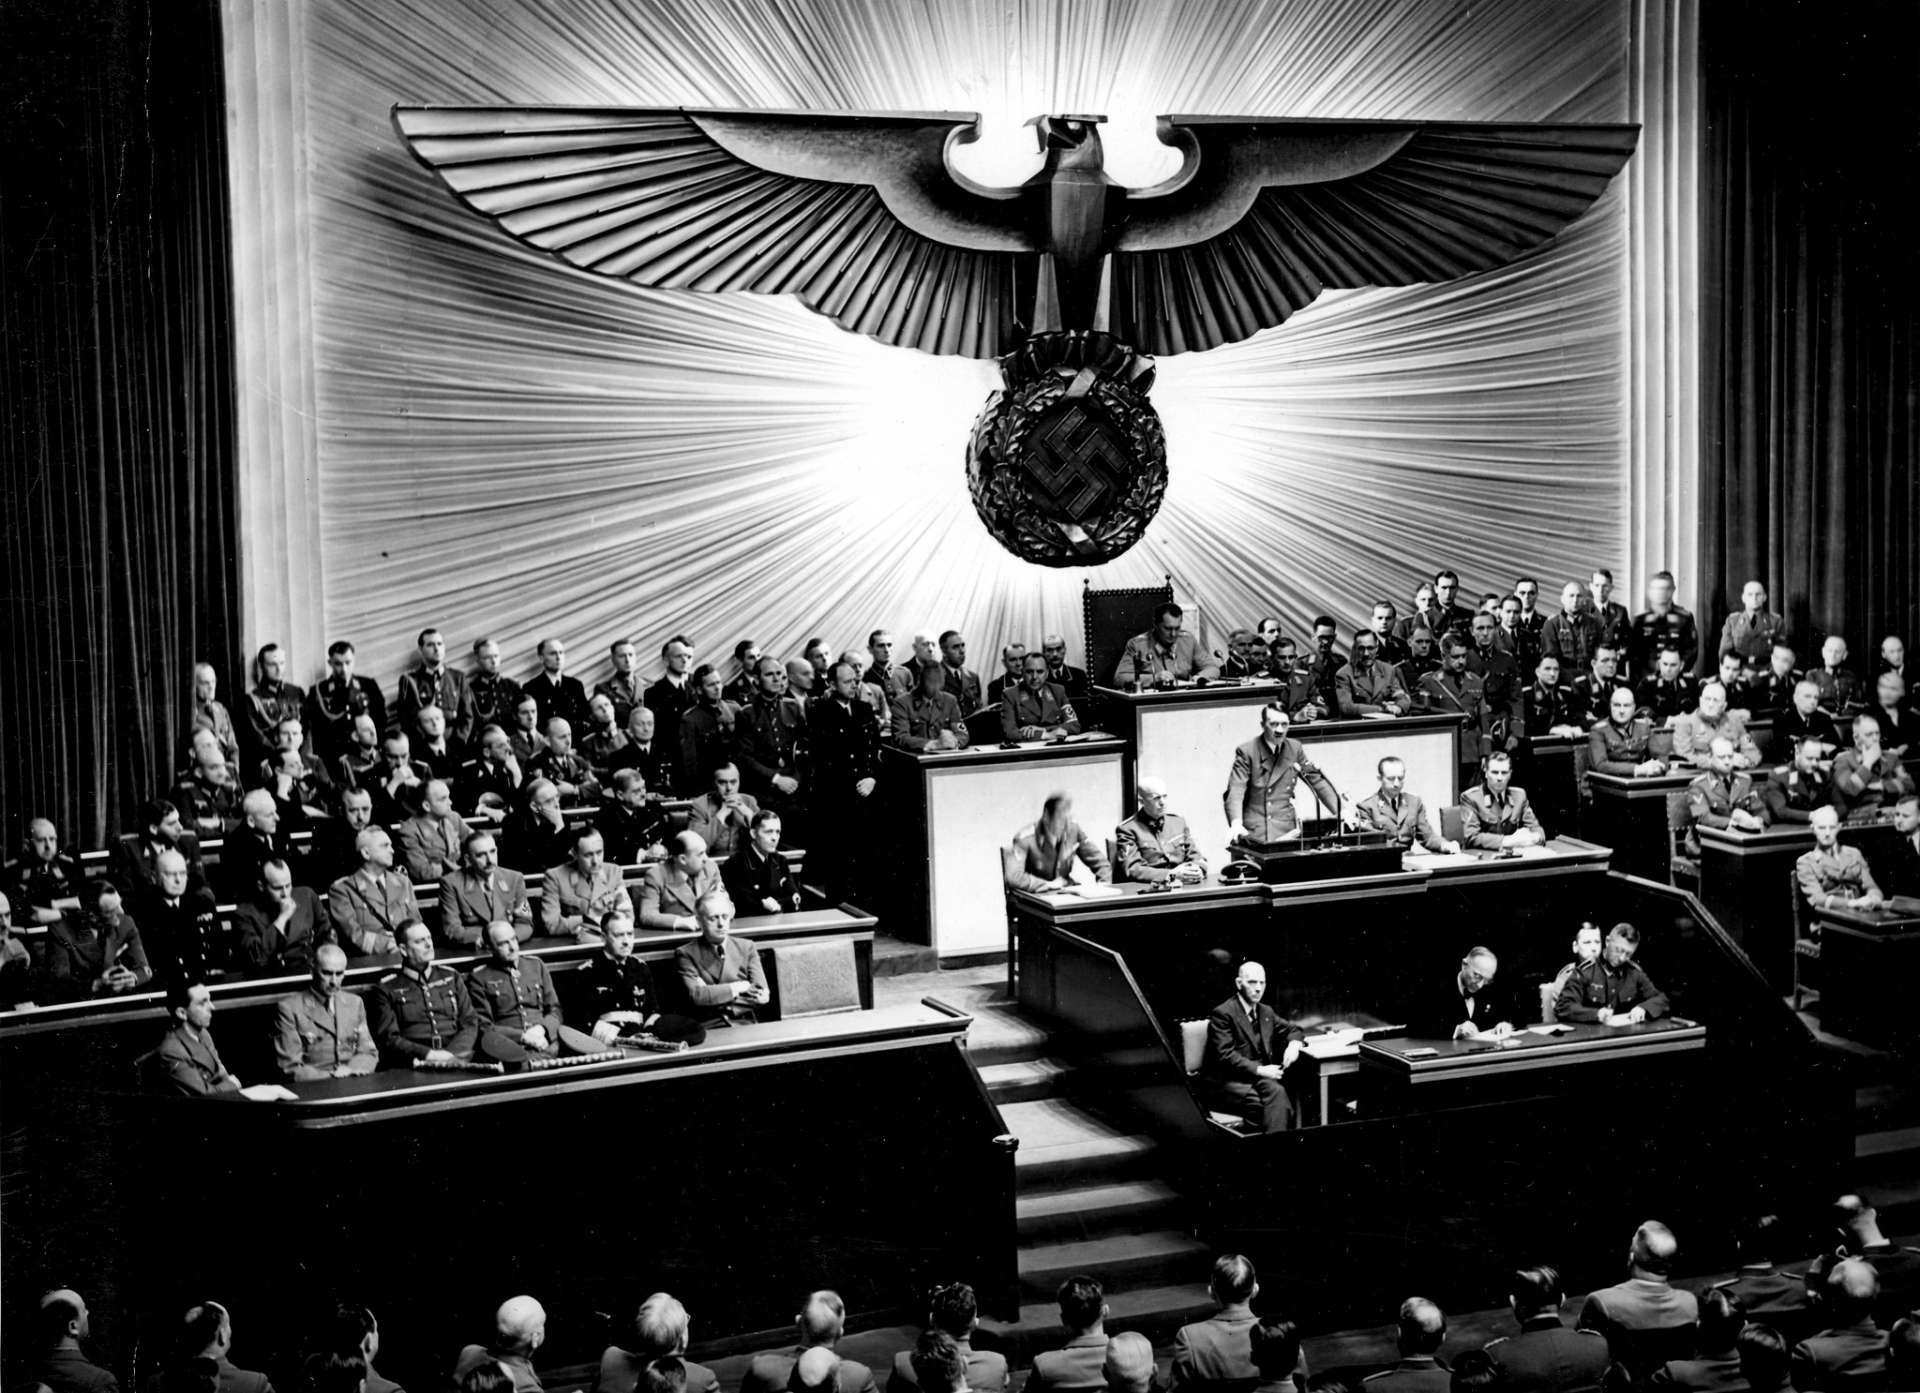 Discurso de Hitler no Bundesreichstag, na declaração de guerra aos Estados Unidos(Foto: Bundesarchiv Bild)